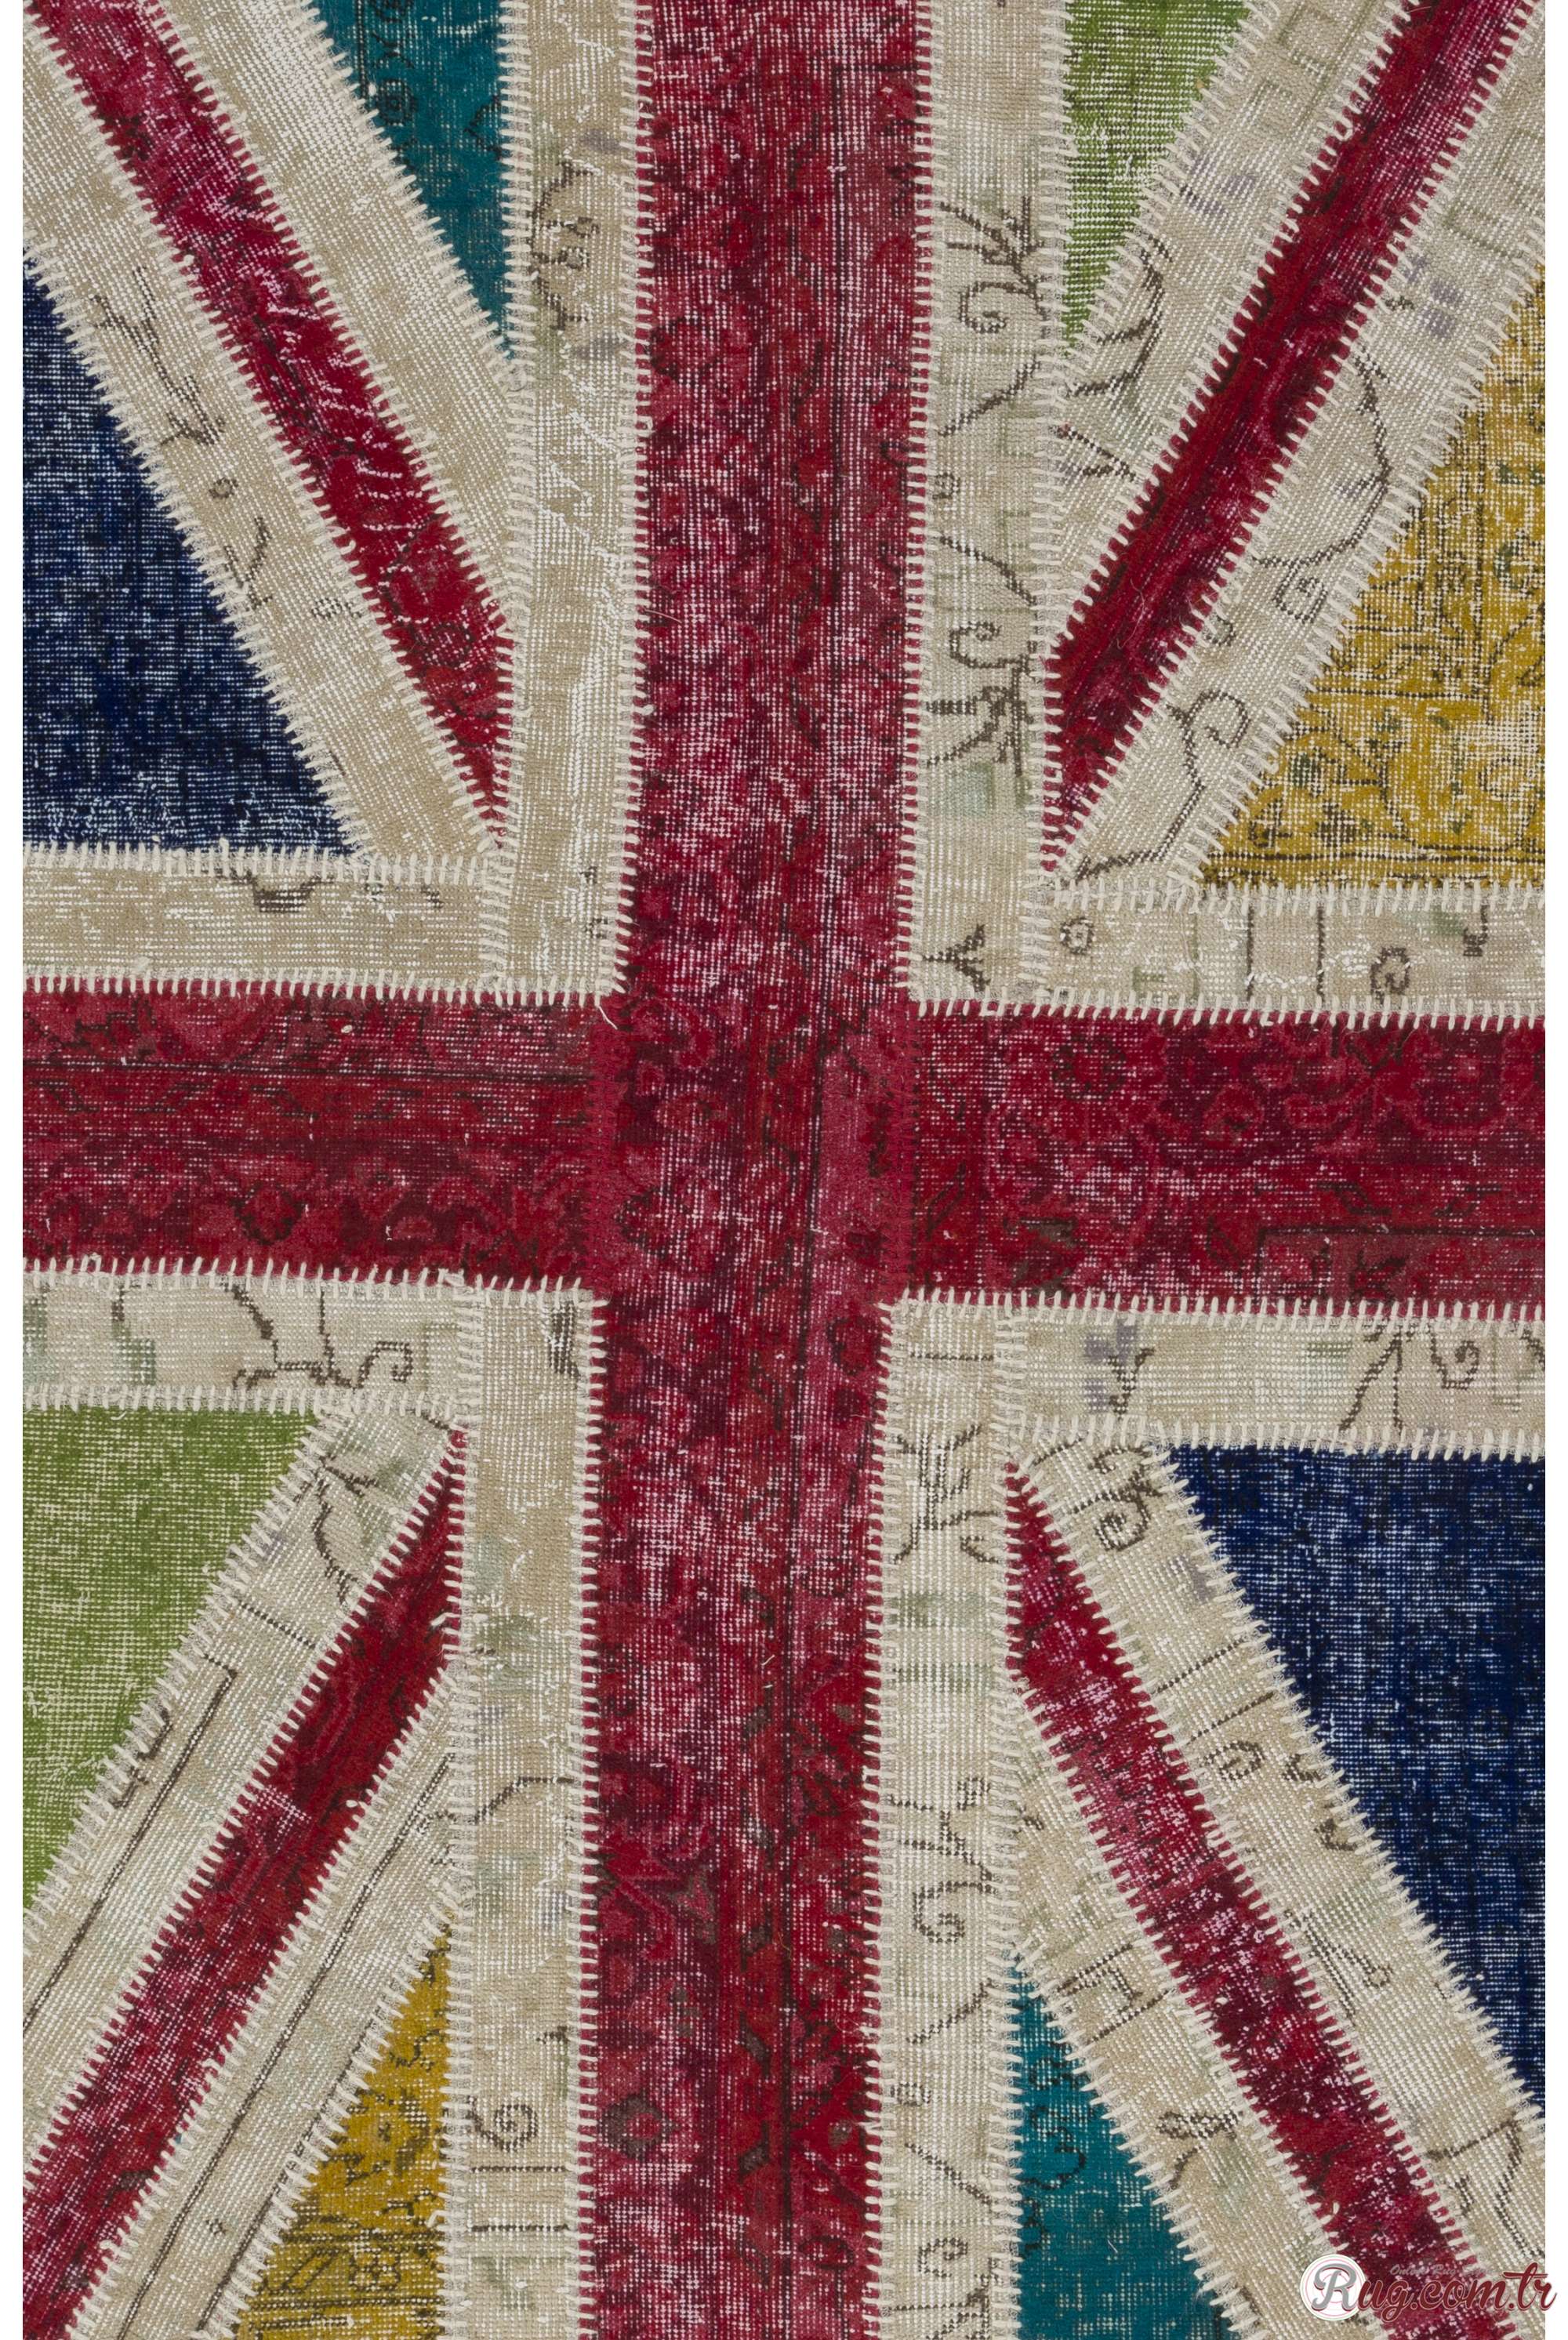 British Flag Union Jack PATCHWORK RUG Made frm OVERDYED Vintage handmade Carpets 